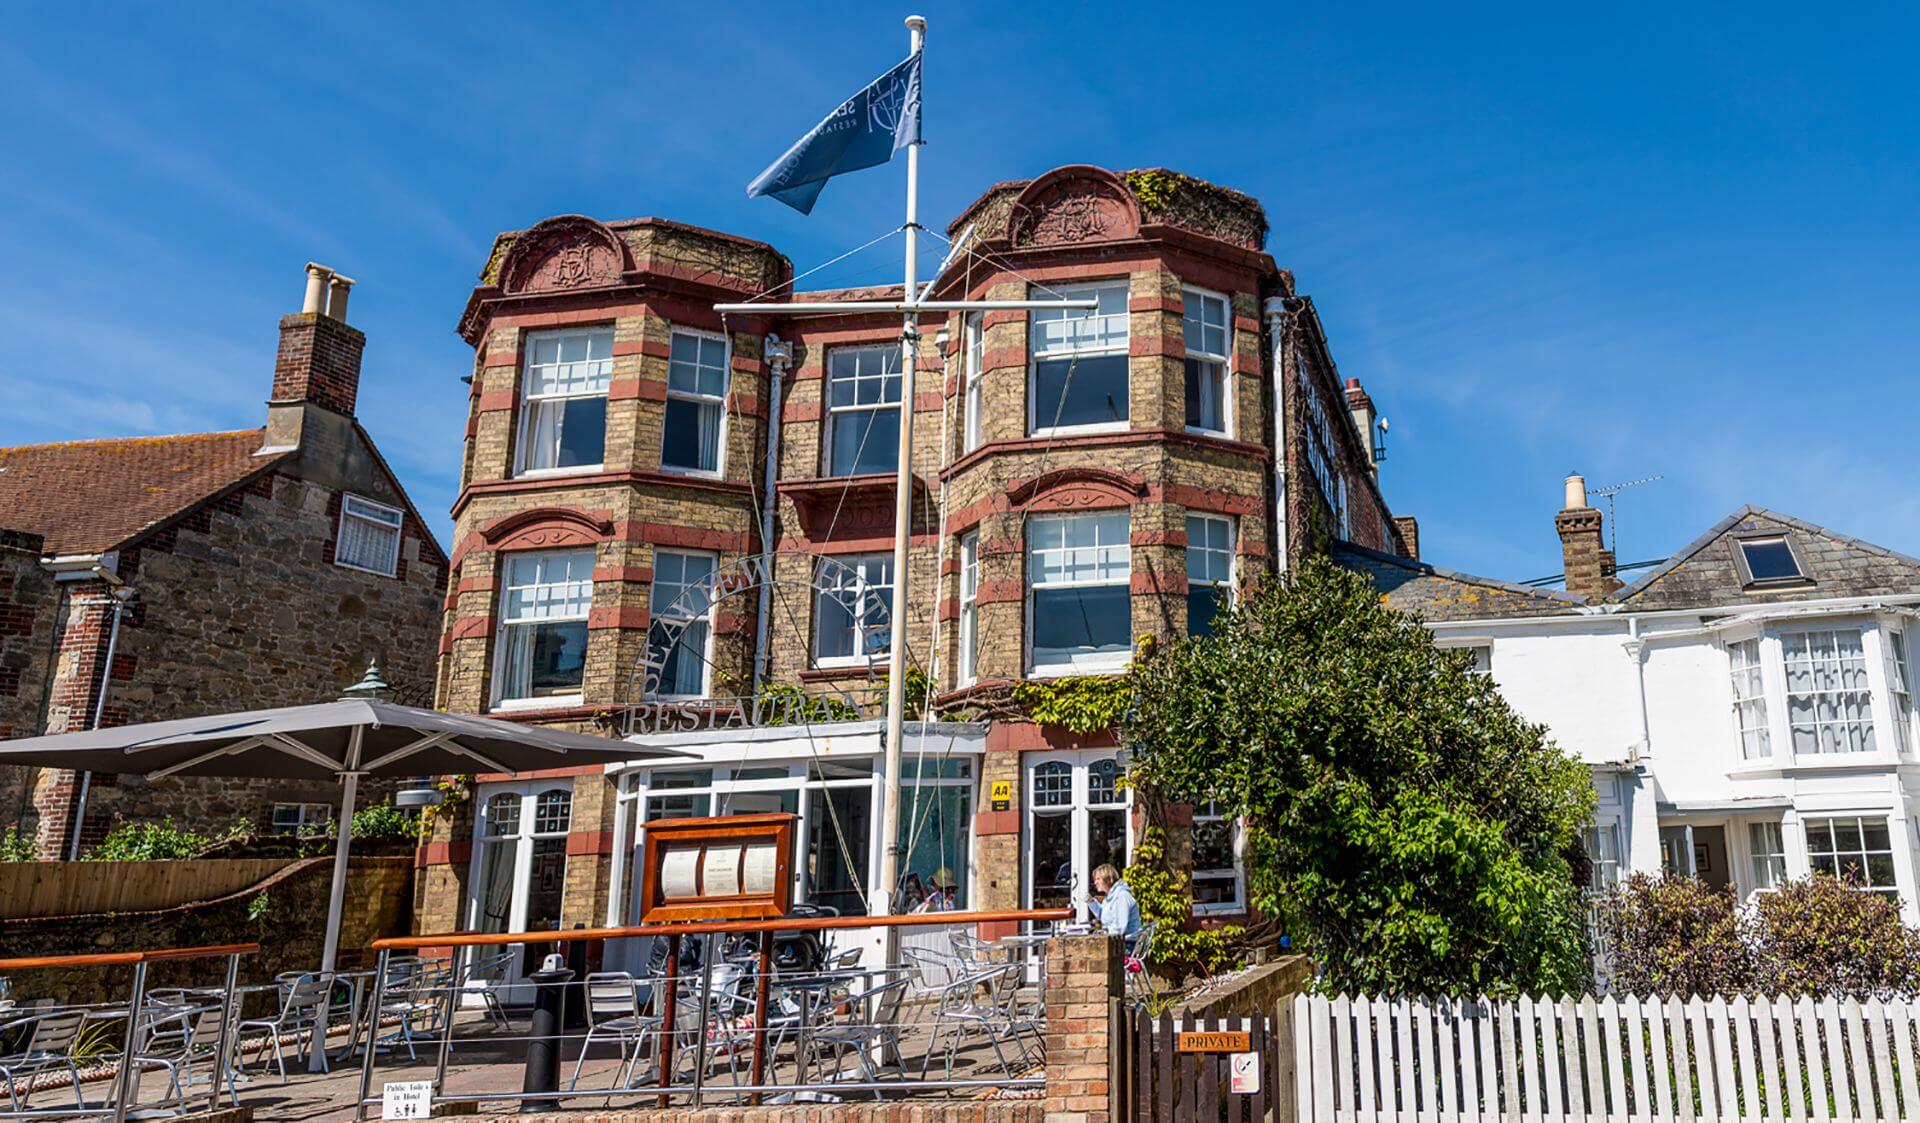 Seaview Hotel Isle of Wight - Coastal Accommodation